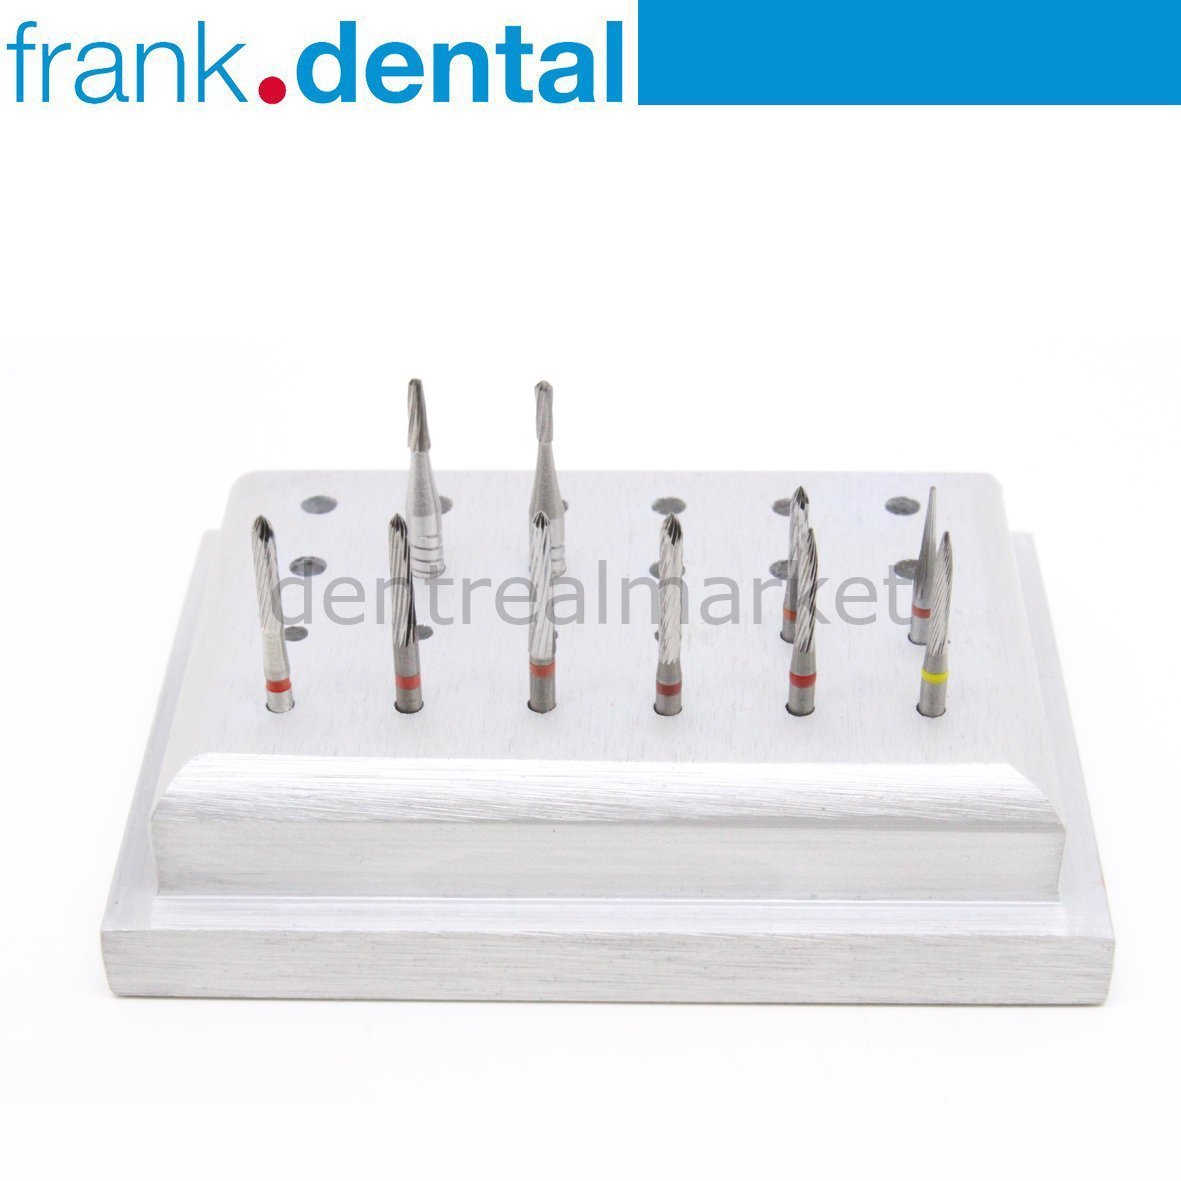 DentrealStore - Frank Dental Orthodontic Adhesive Remover & Debonding Bur Set